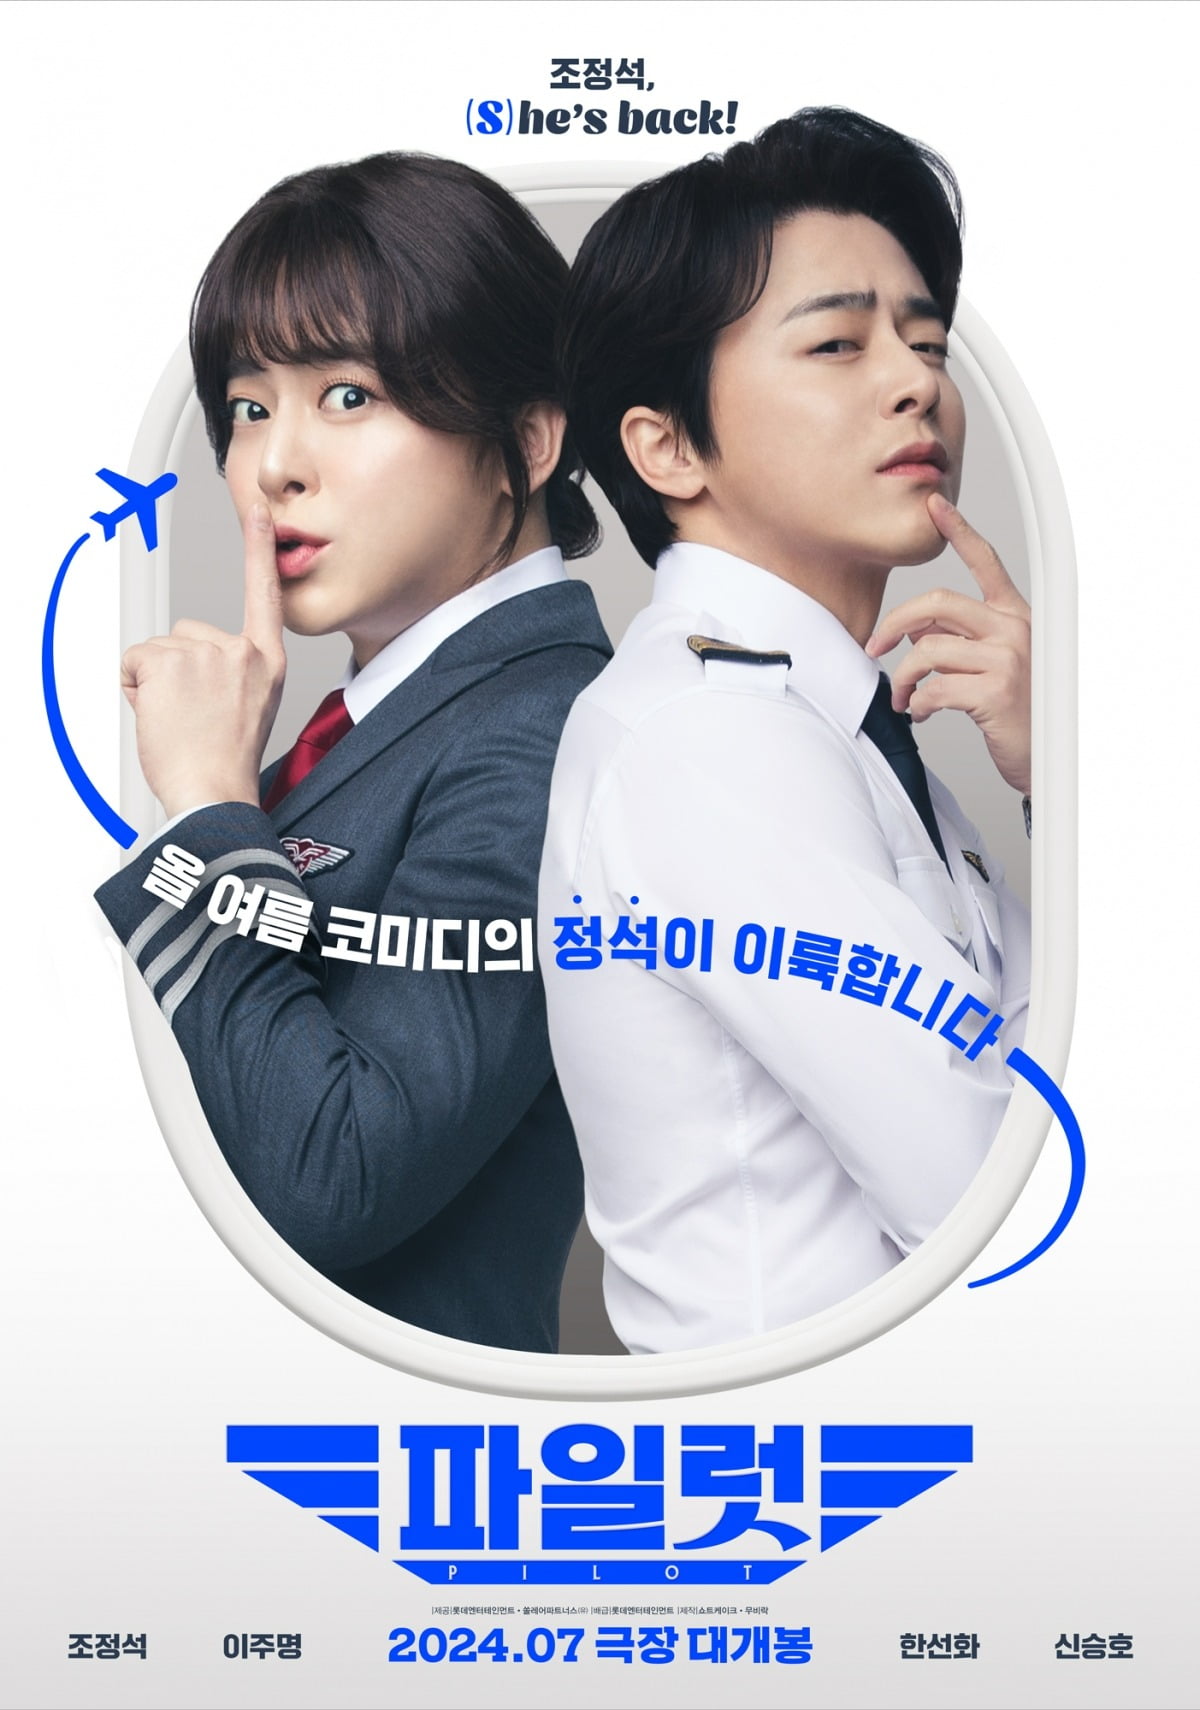 Jo Jung-seok's comedy film 'Pilot' is released.